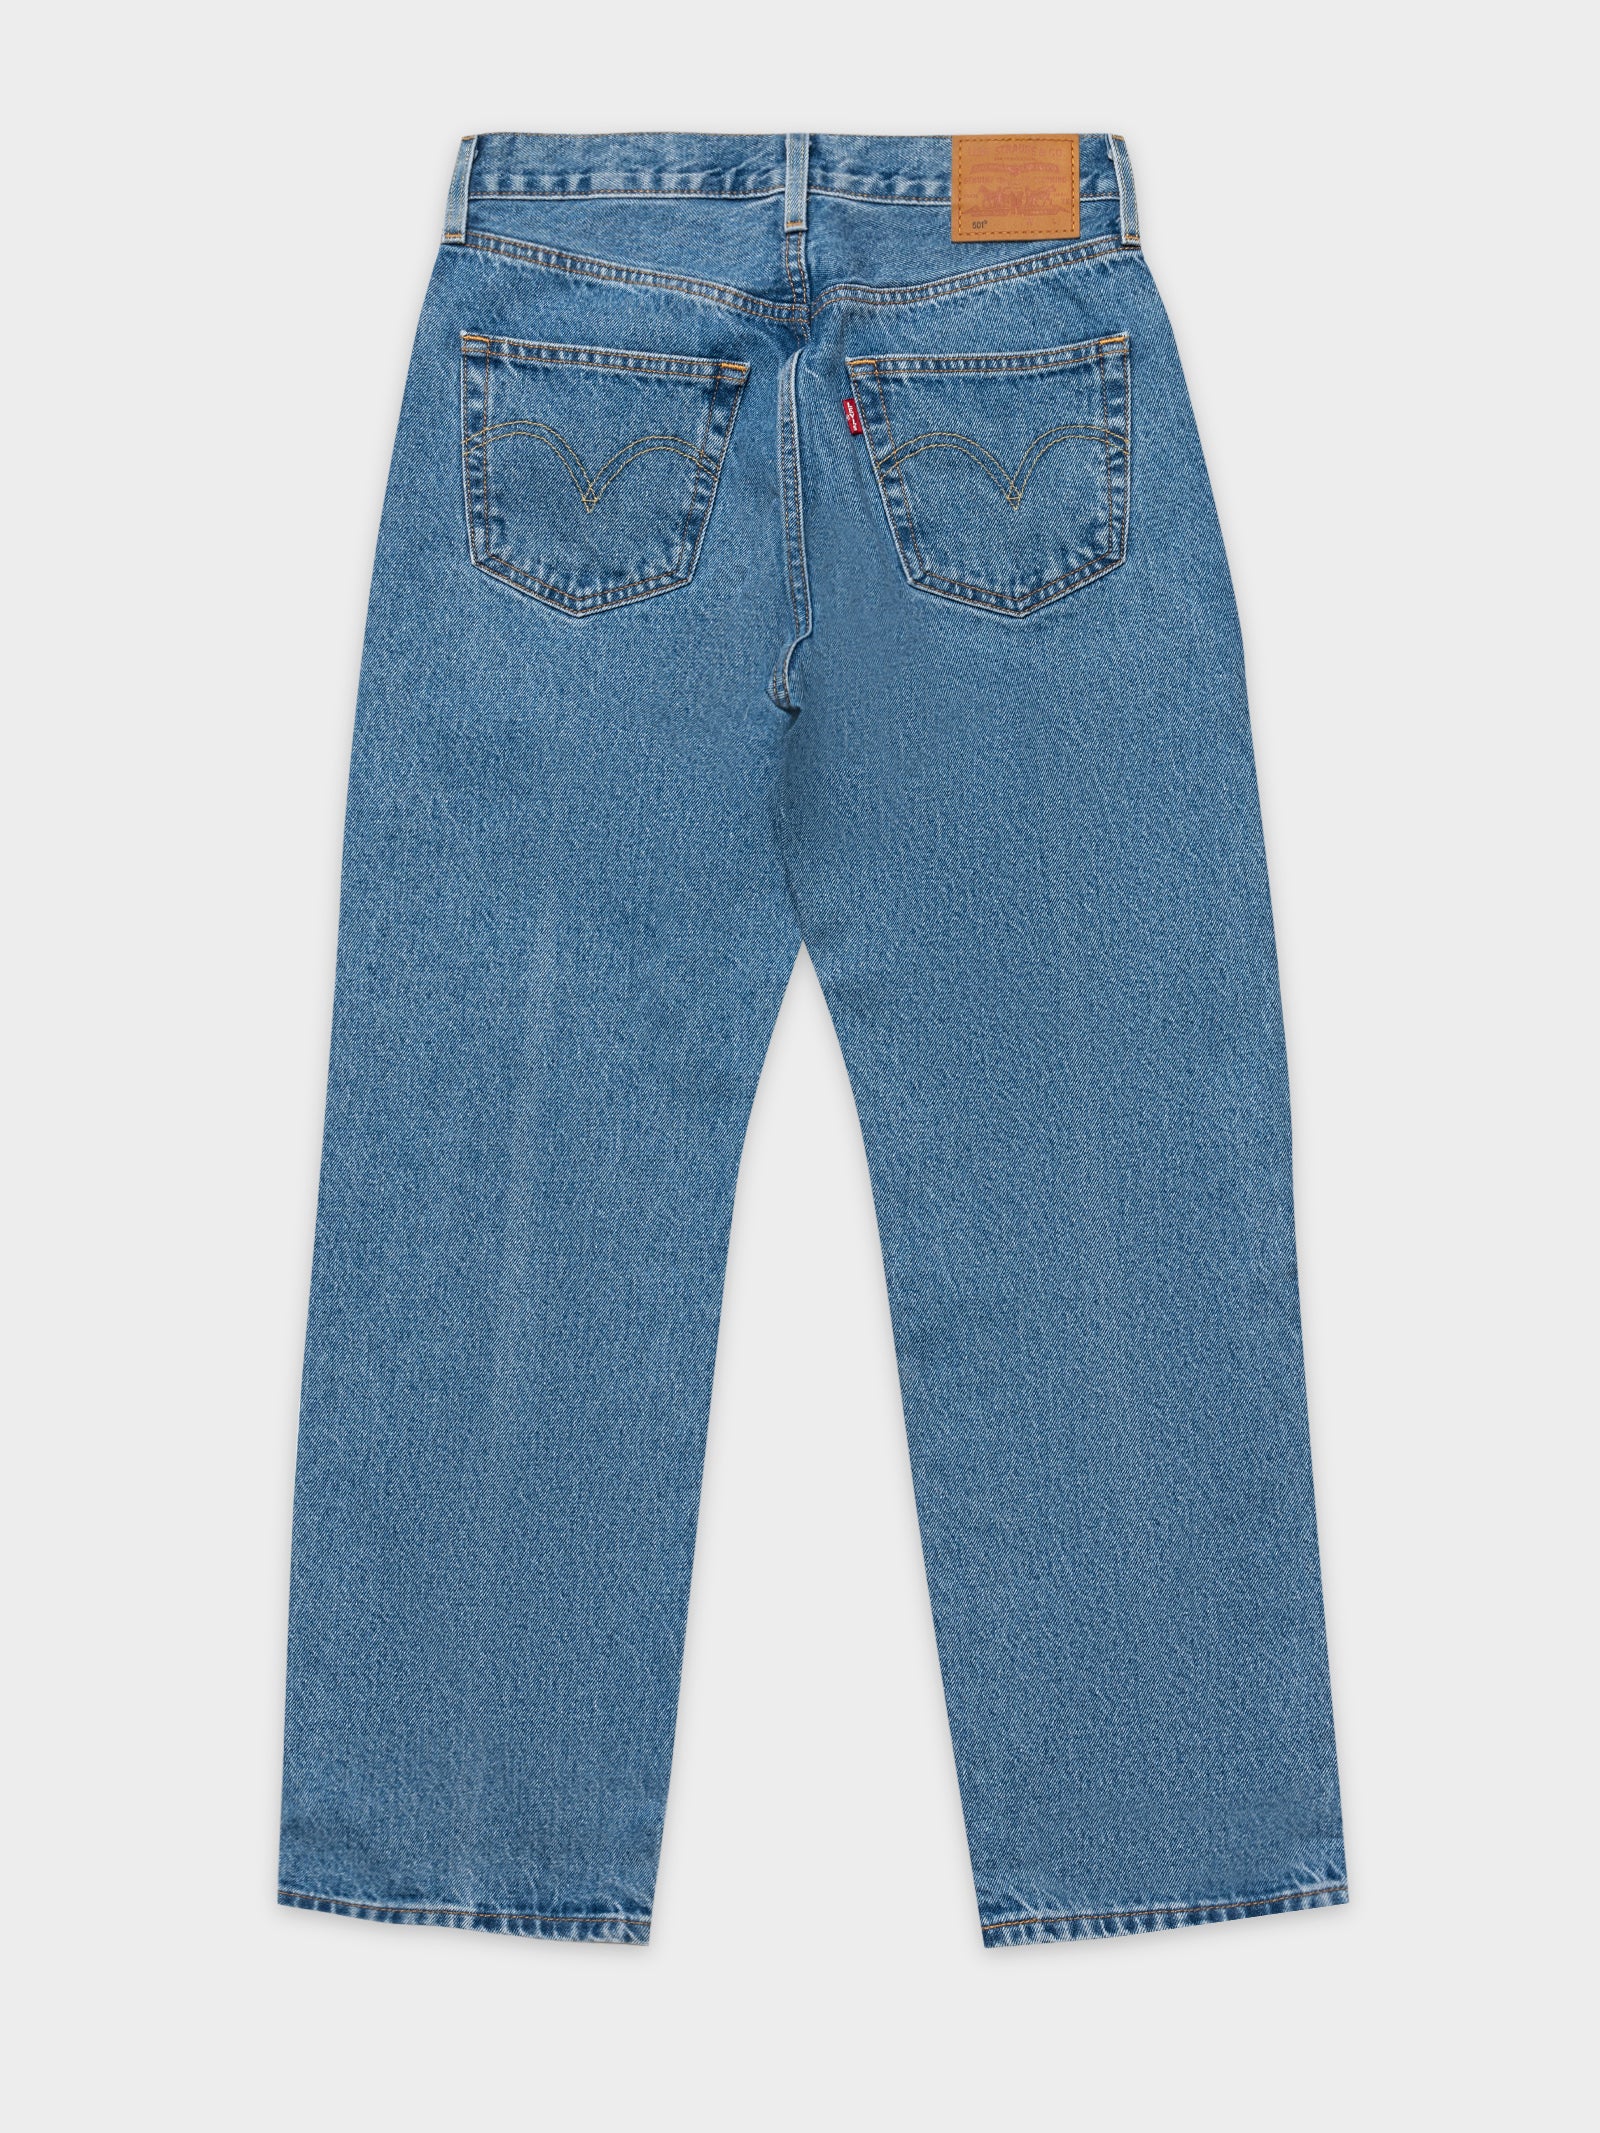 90's 501 Jeans in Drew Me In - Glue Store